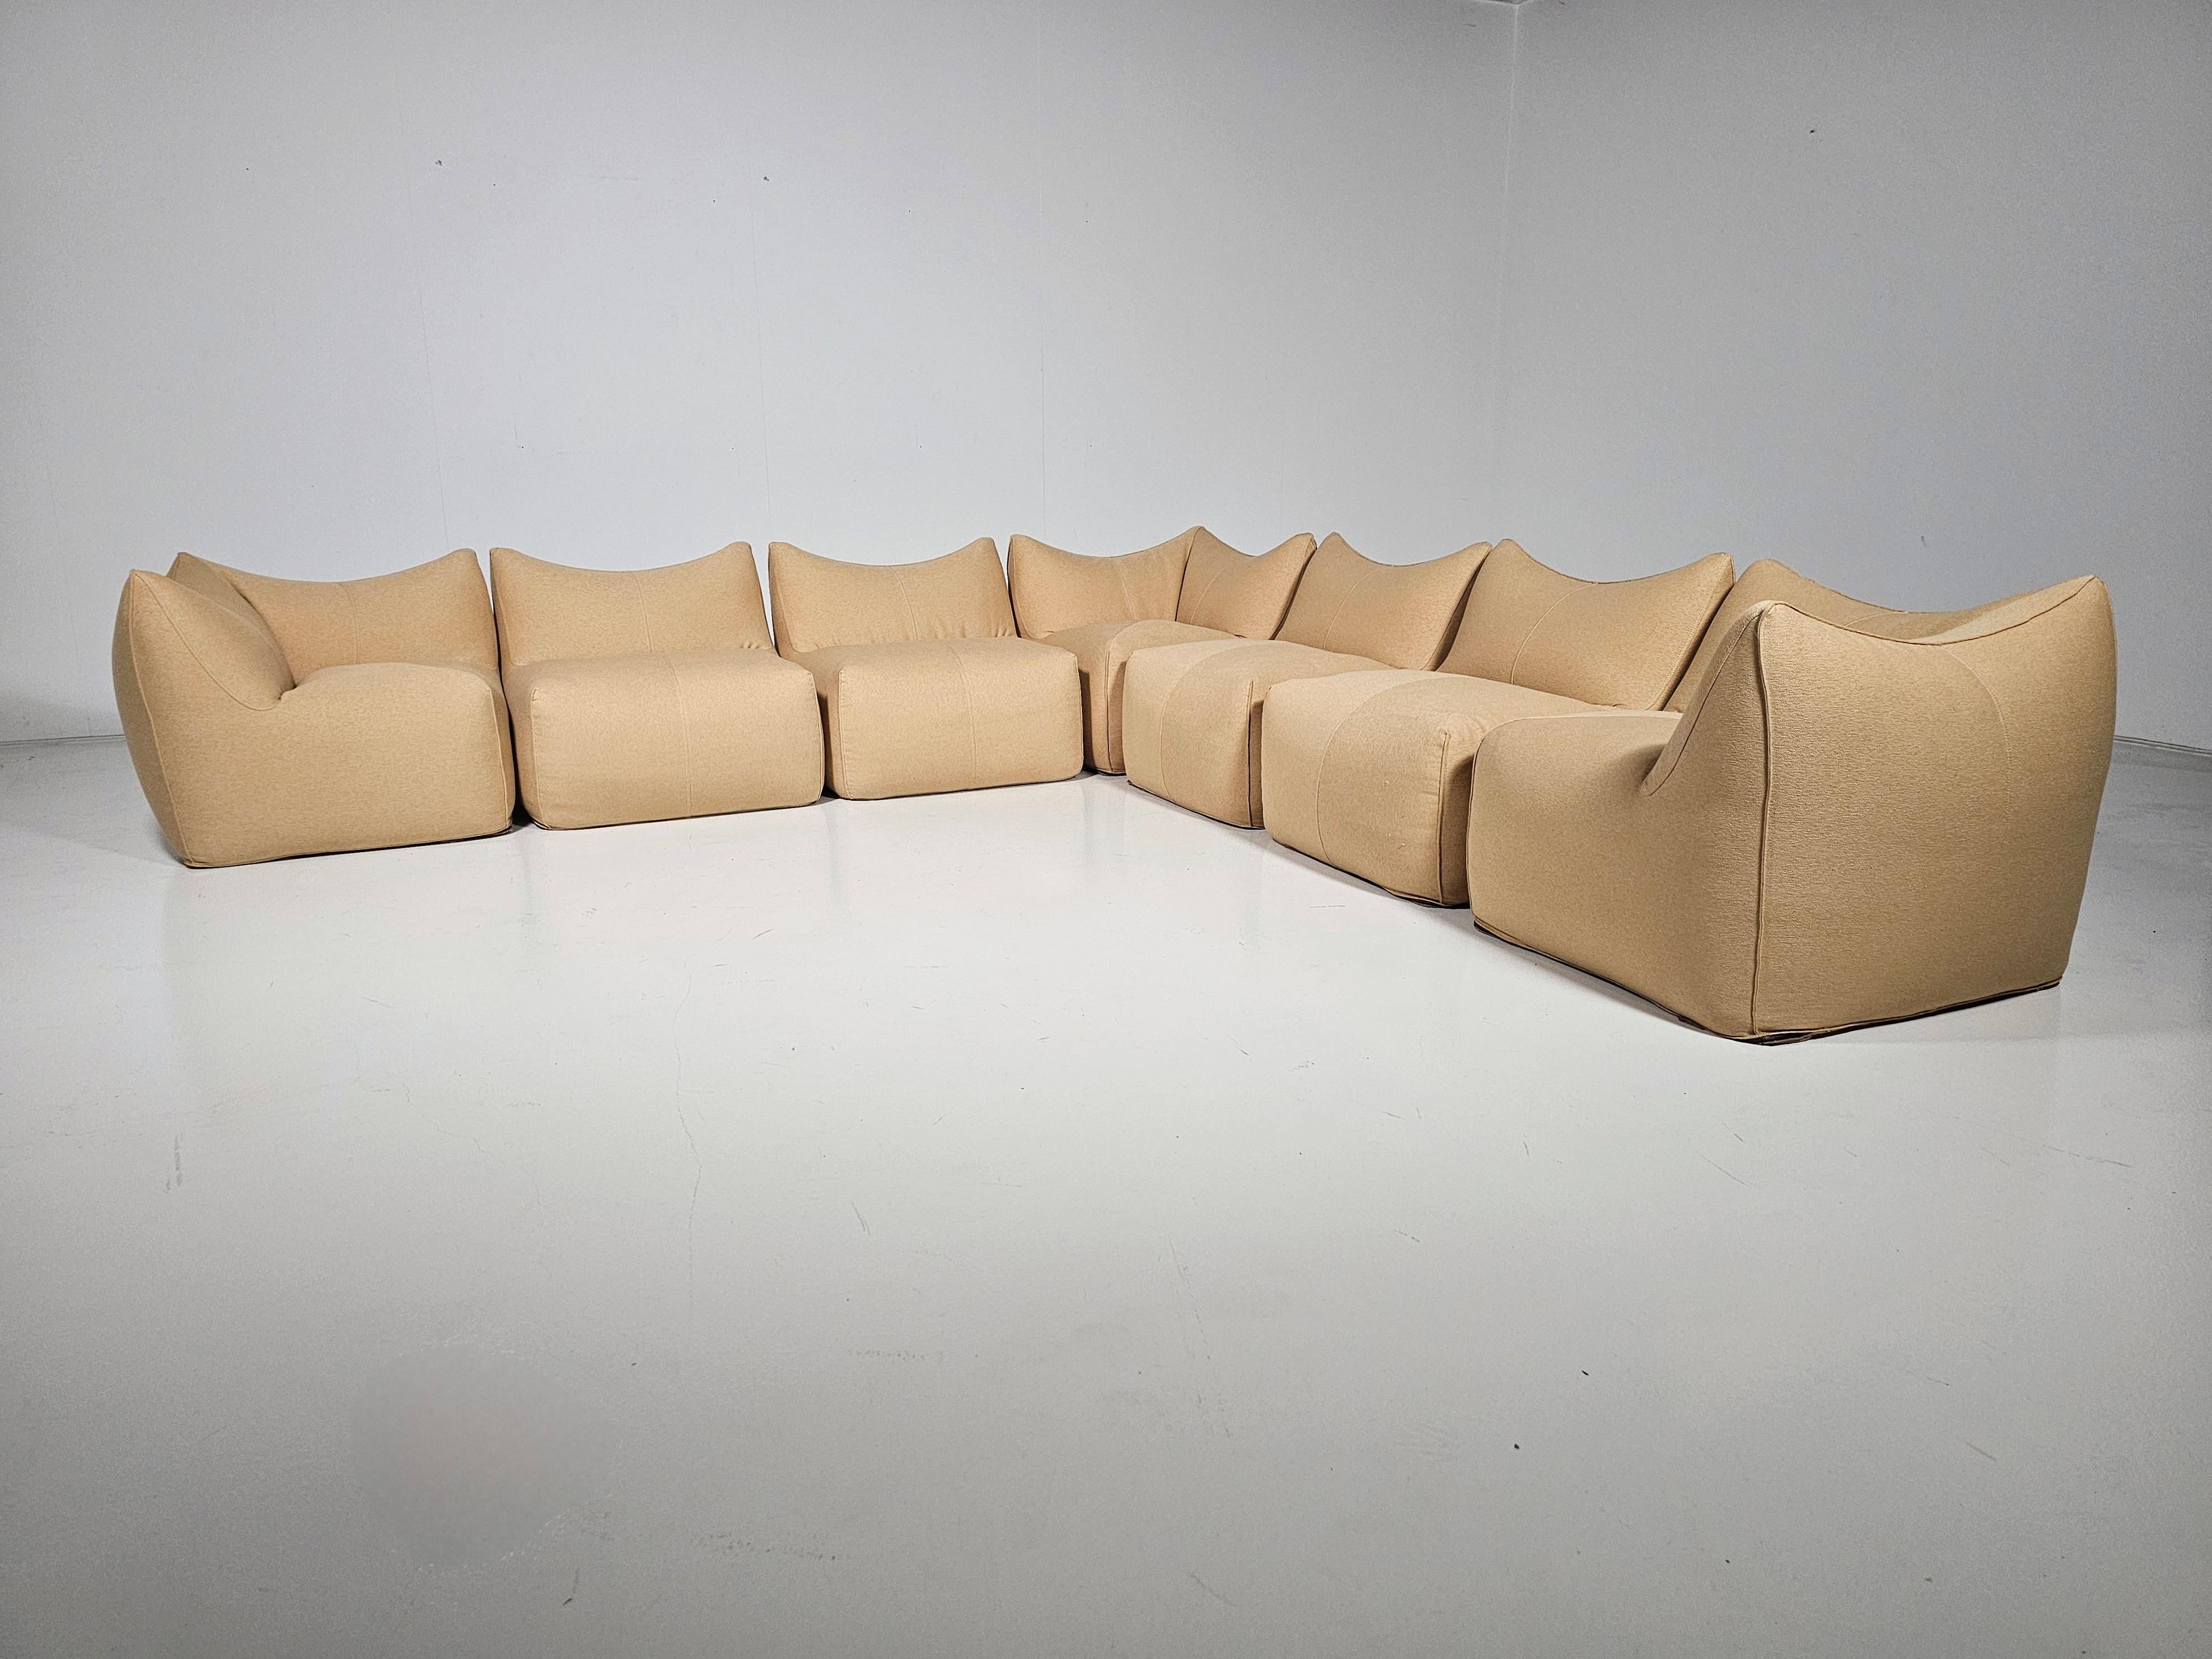 Italian Le Bambole sand color Sectional Sofa by Mario Bellni for B&B Italia, 1970s For Sale